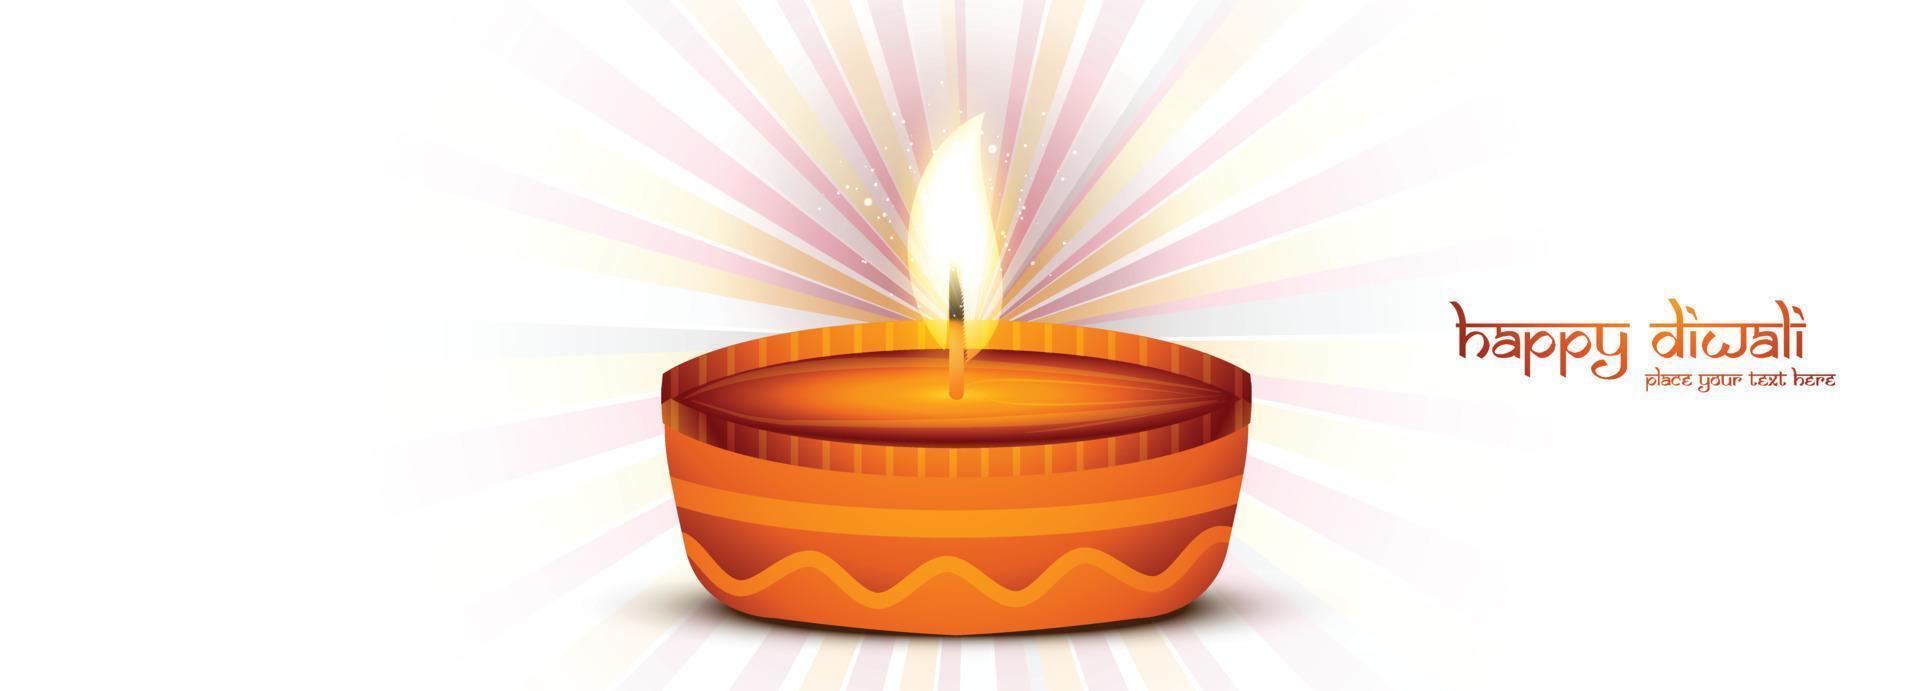 Happy diwali wishes banner celebration card background vector